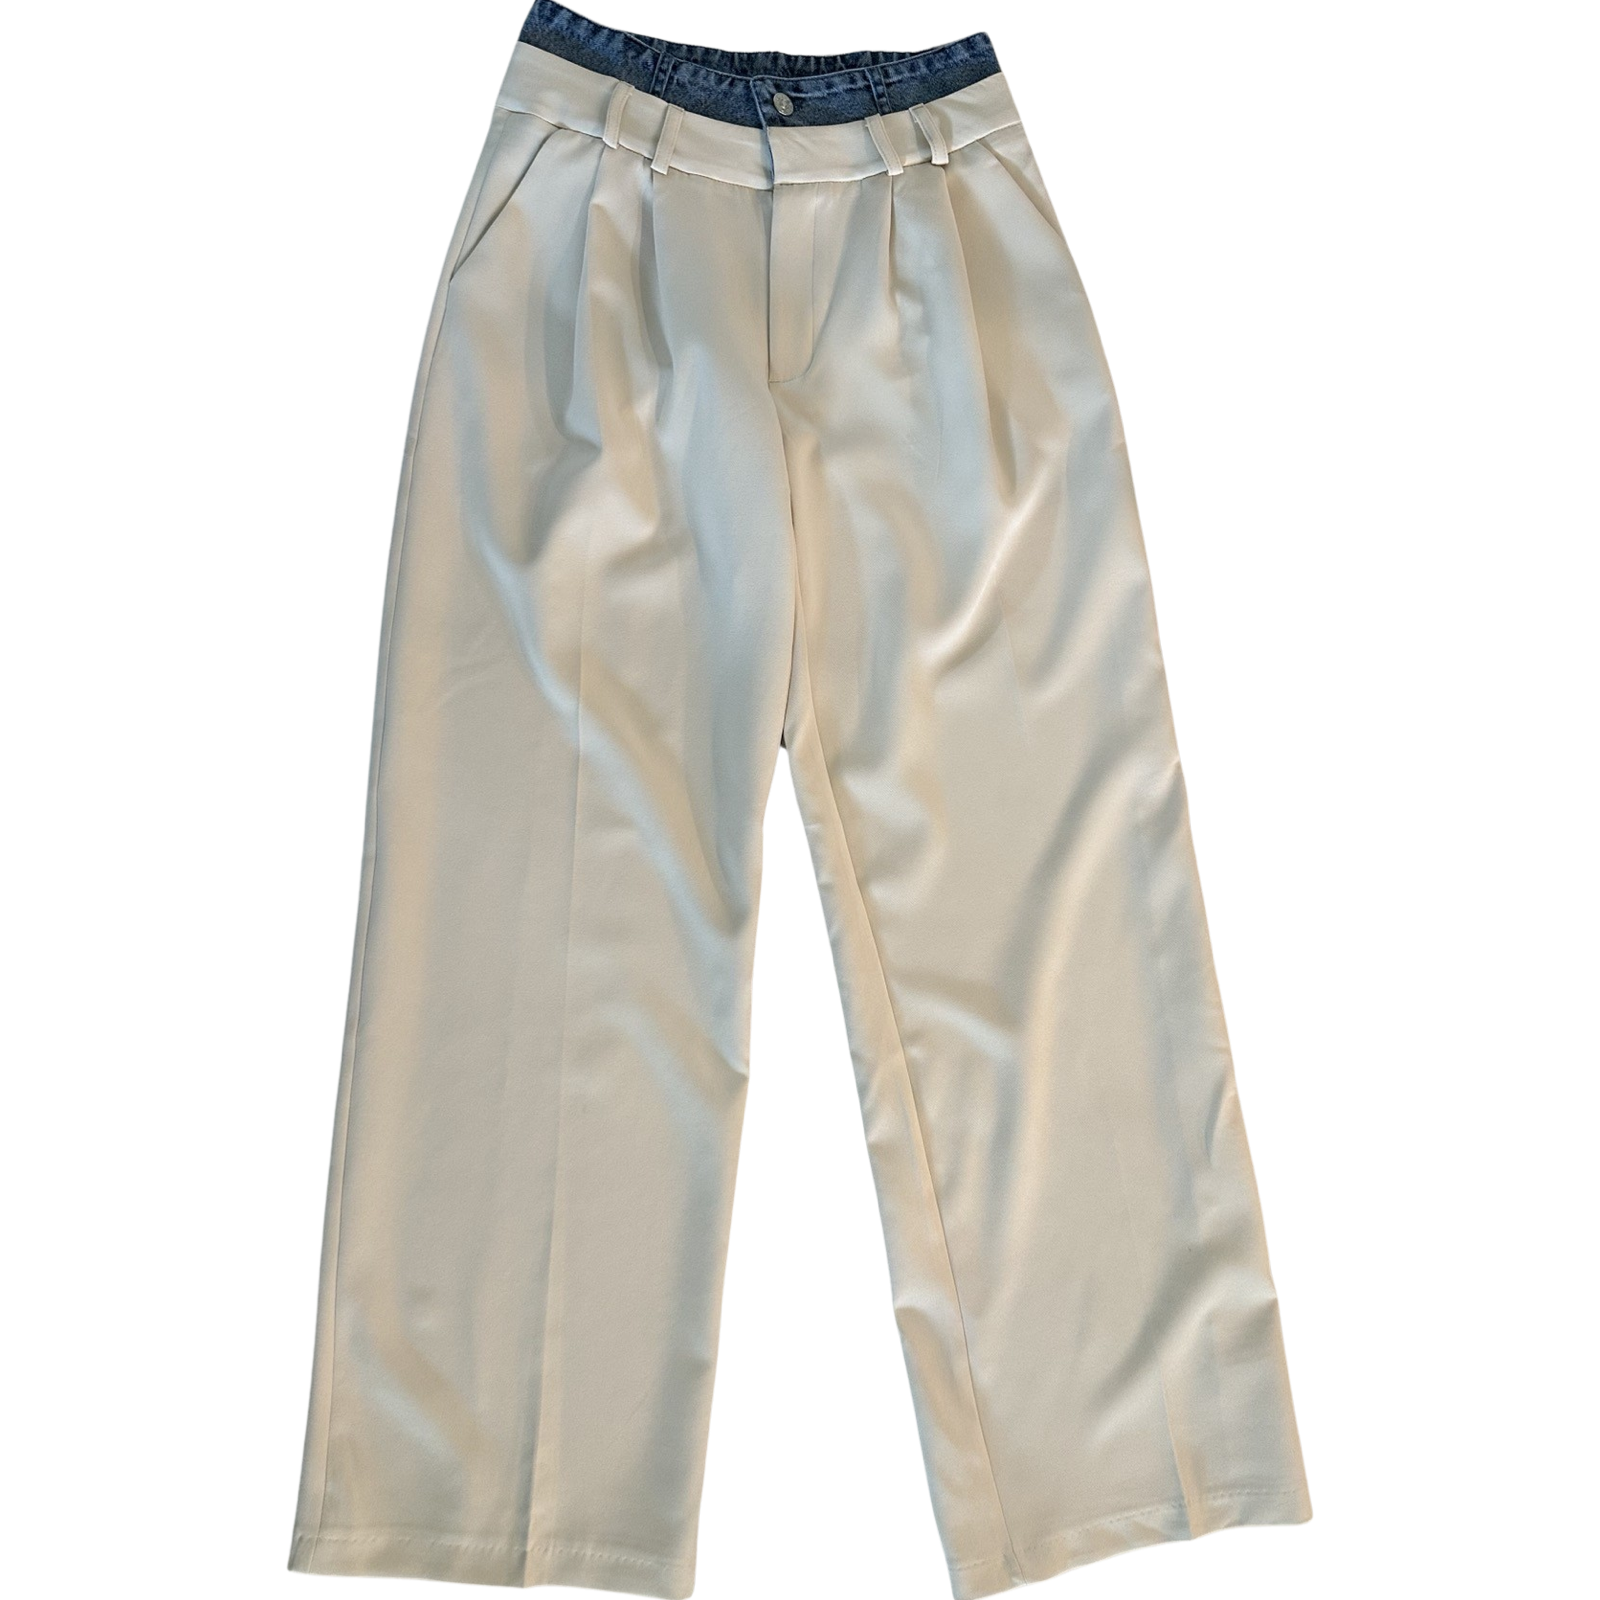 Gala pants with denim